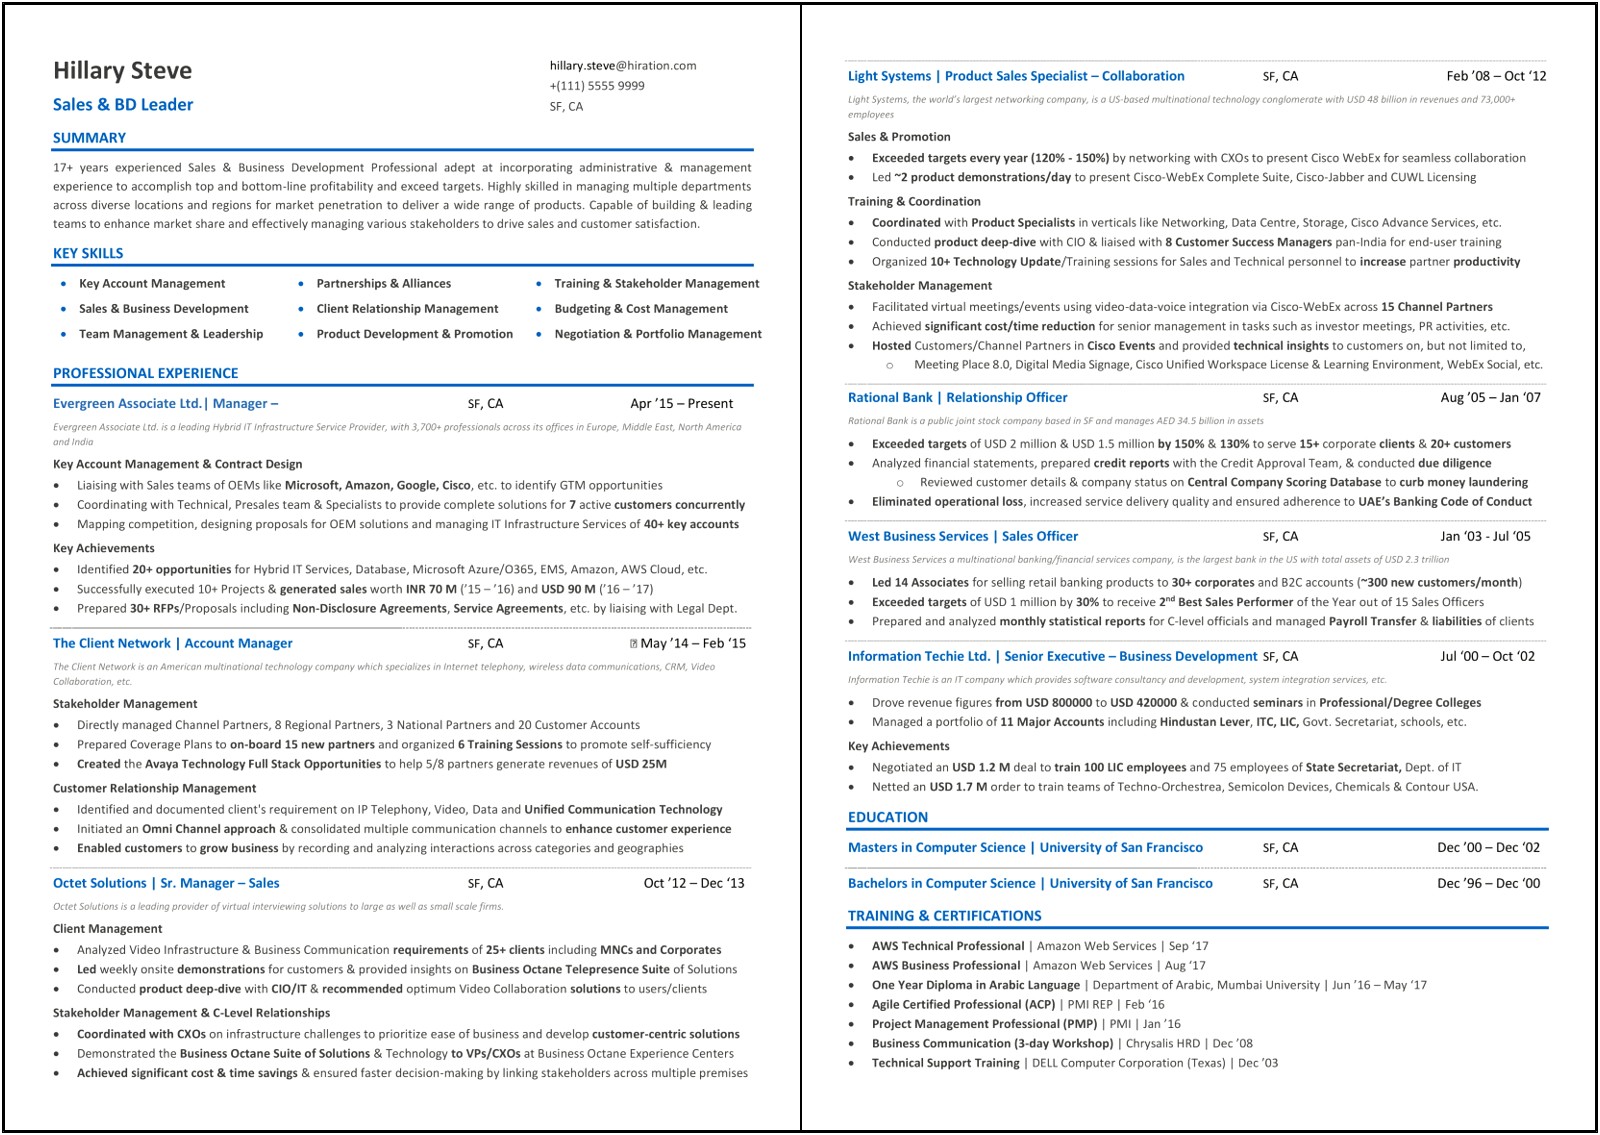 Resume Summary Examples Sales Associate